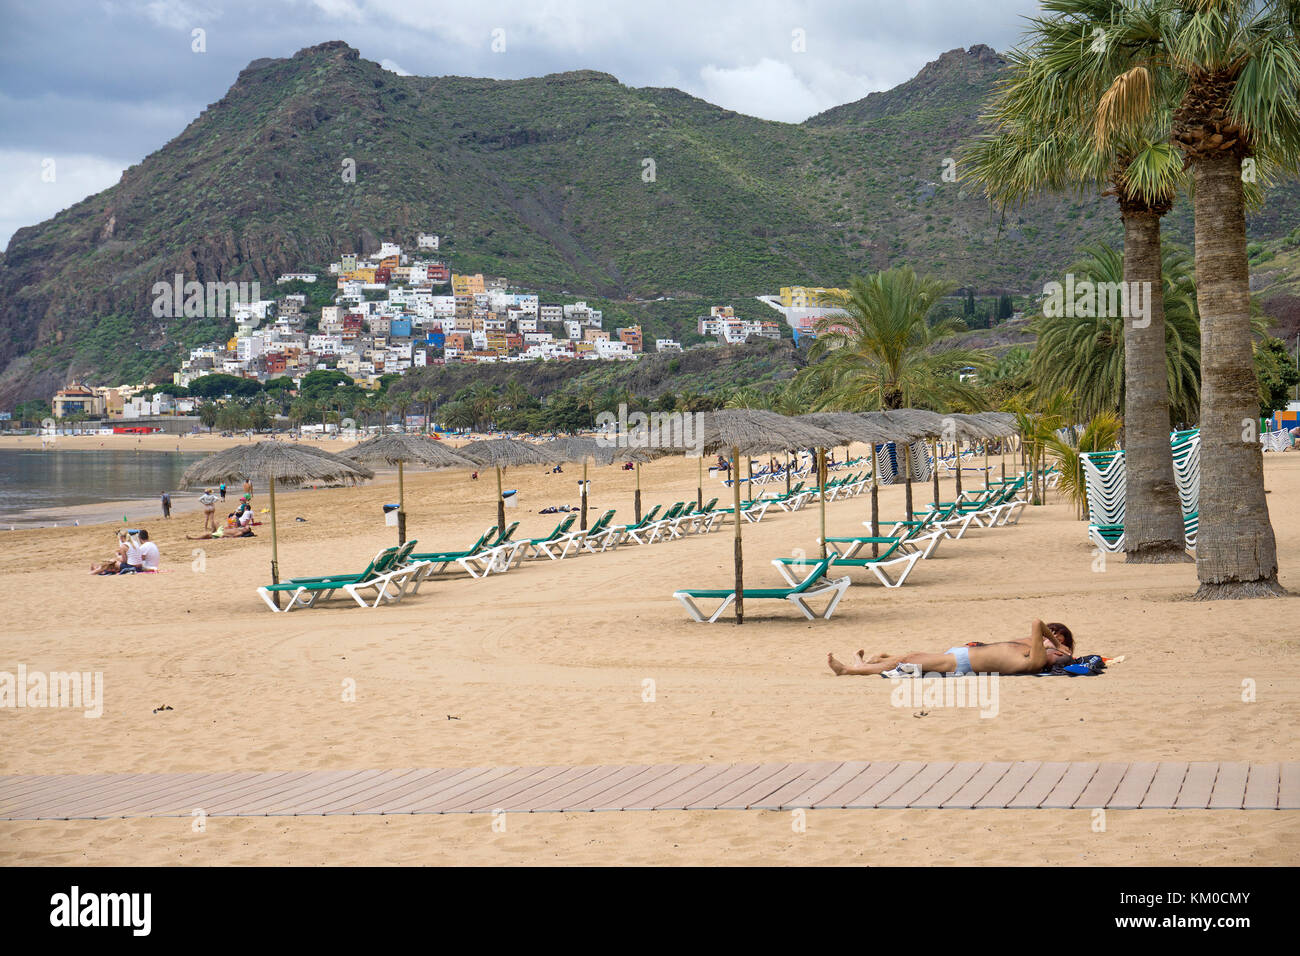 Playa teresitas, popolare spiaggia di san andres,l'isola di Tenerife, Isole canarie, Spagna Foto Stock